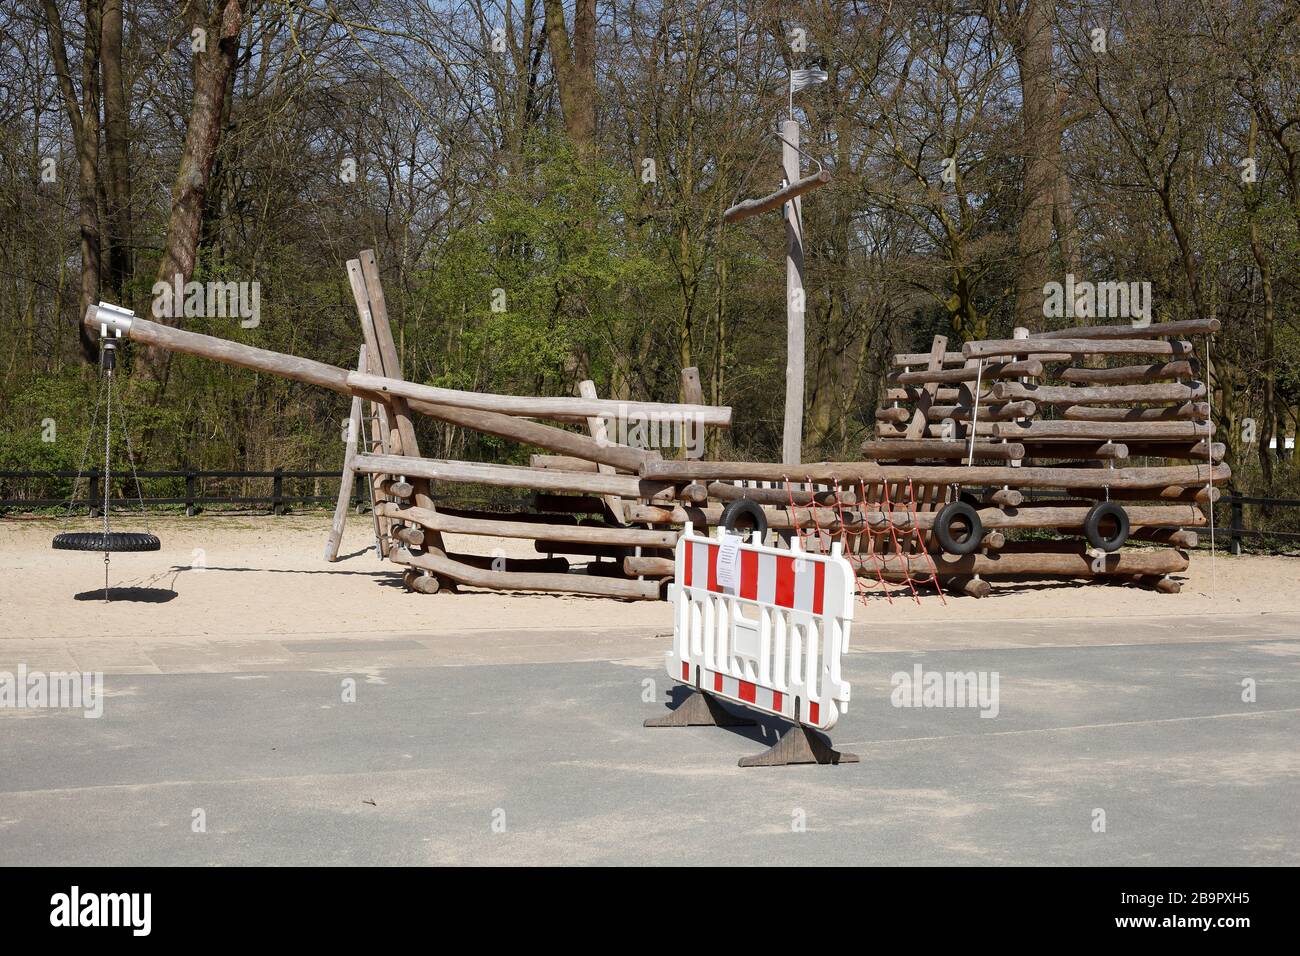 Spielplatz, Schranke, Spielplatzschild wegen Corona-Virus gesperrt, Zutritt verboten, Deutschland, Europa Stockfoto